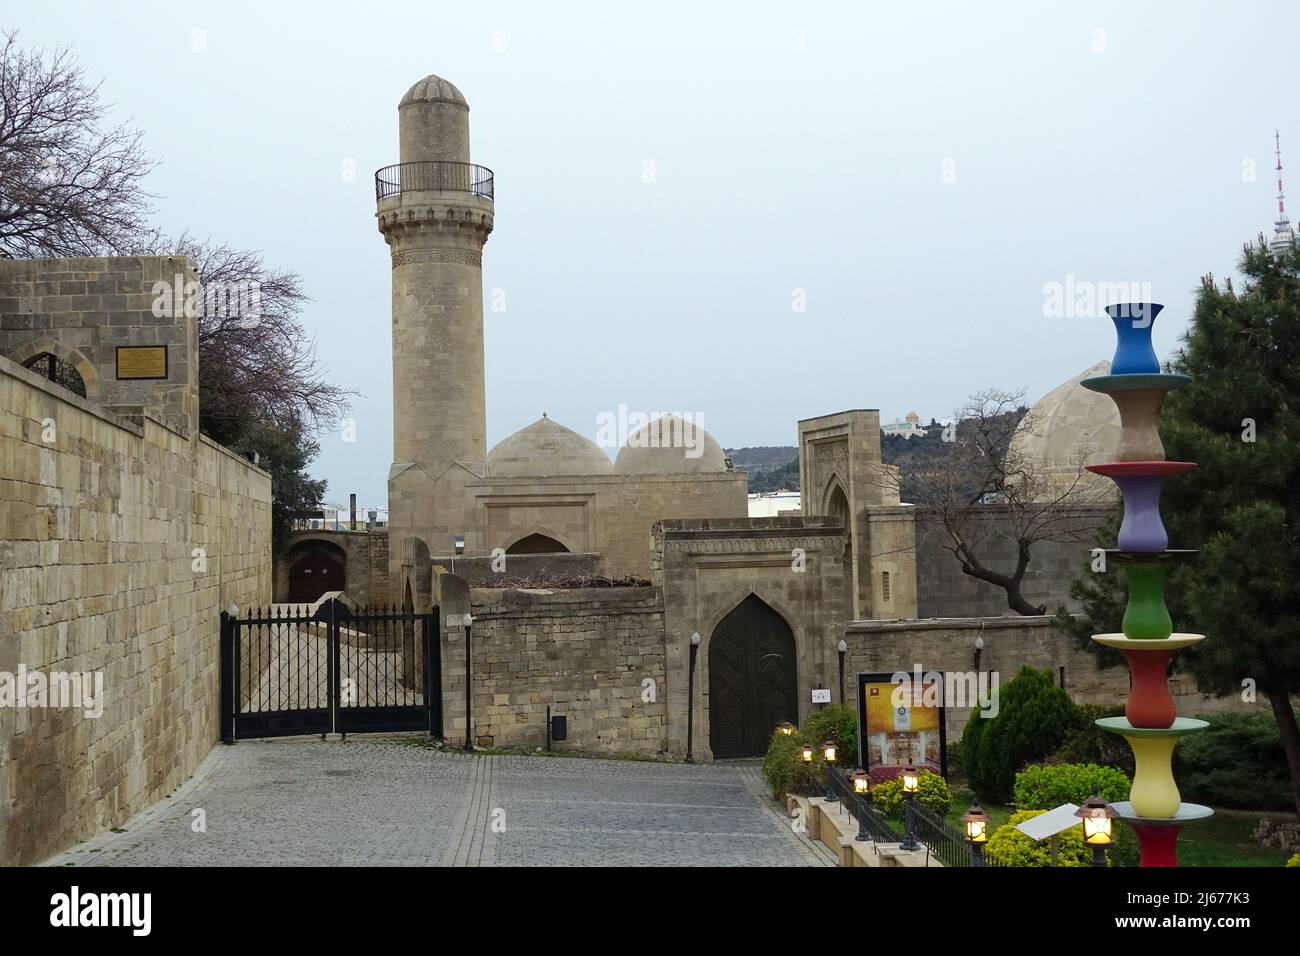 Palatial mosque, Saray məscidi, Palace of the Shirvanshahs, Icheri Sheher, Old City, Baku, İçərişəhər, Azerbaijan, UNESCO World Heritage Site Stock Photo